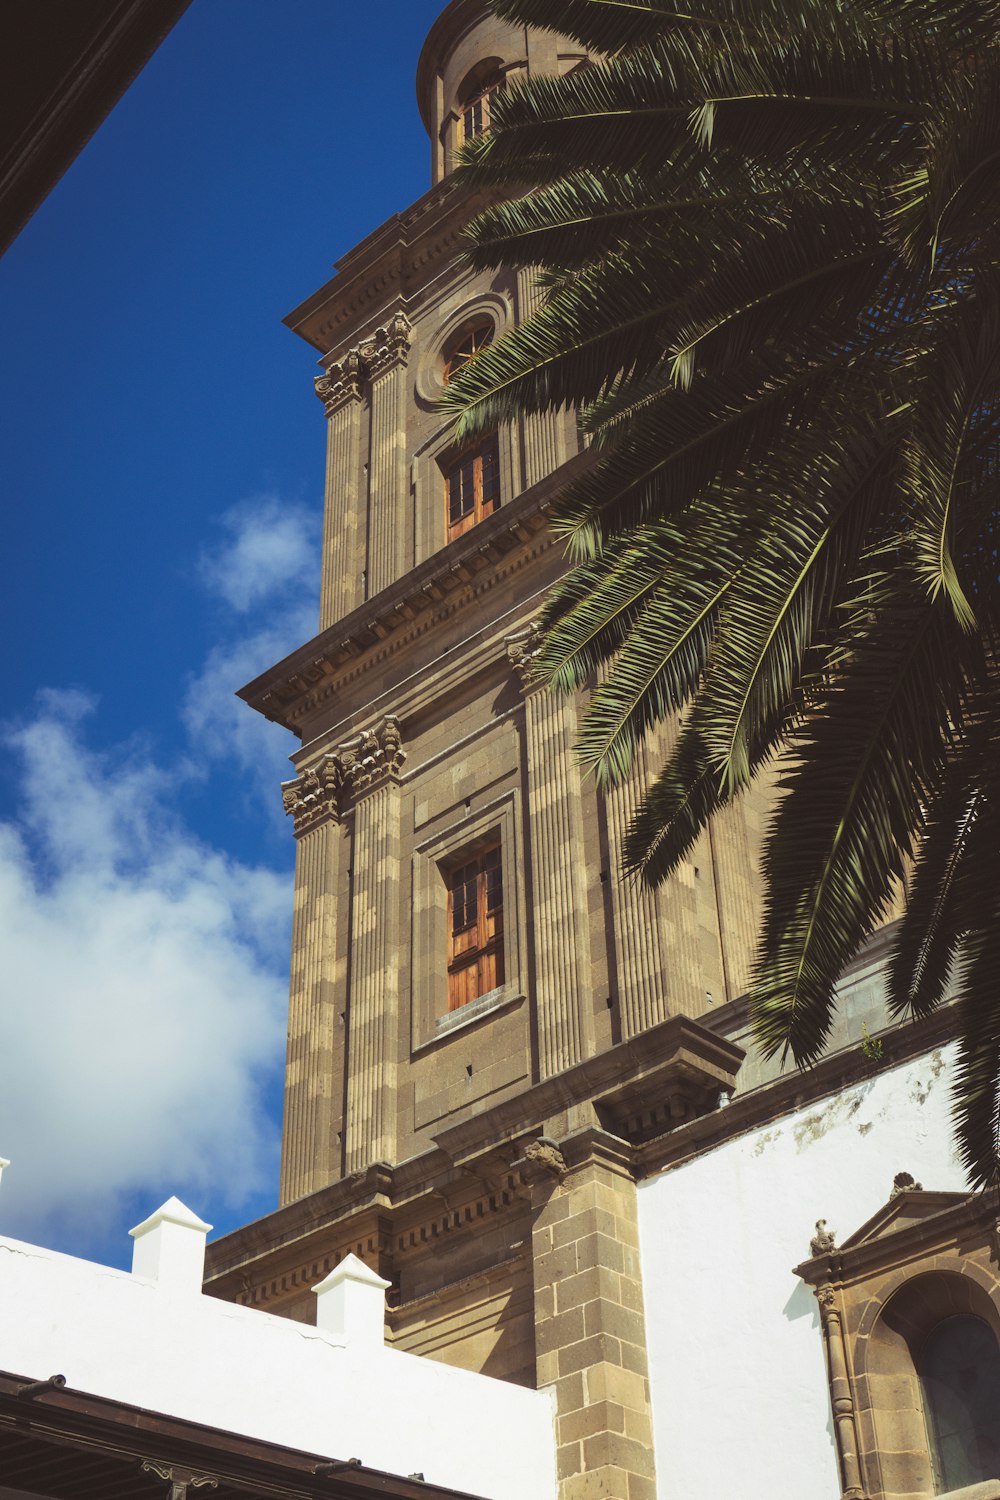 a palm tree next to a building